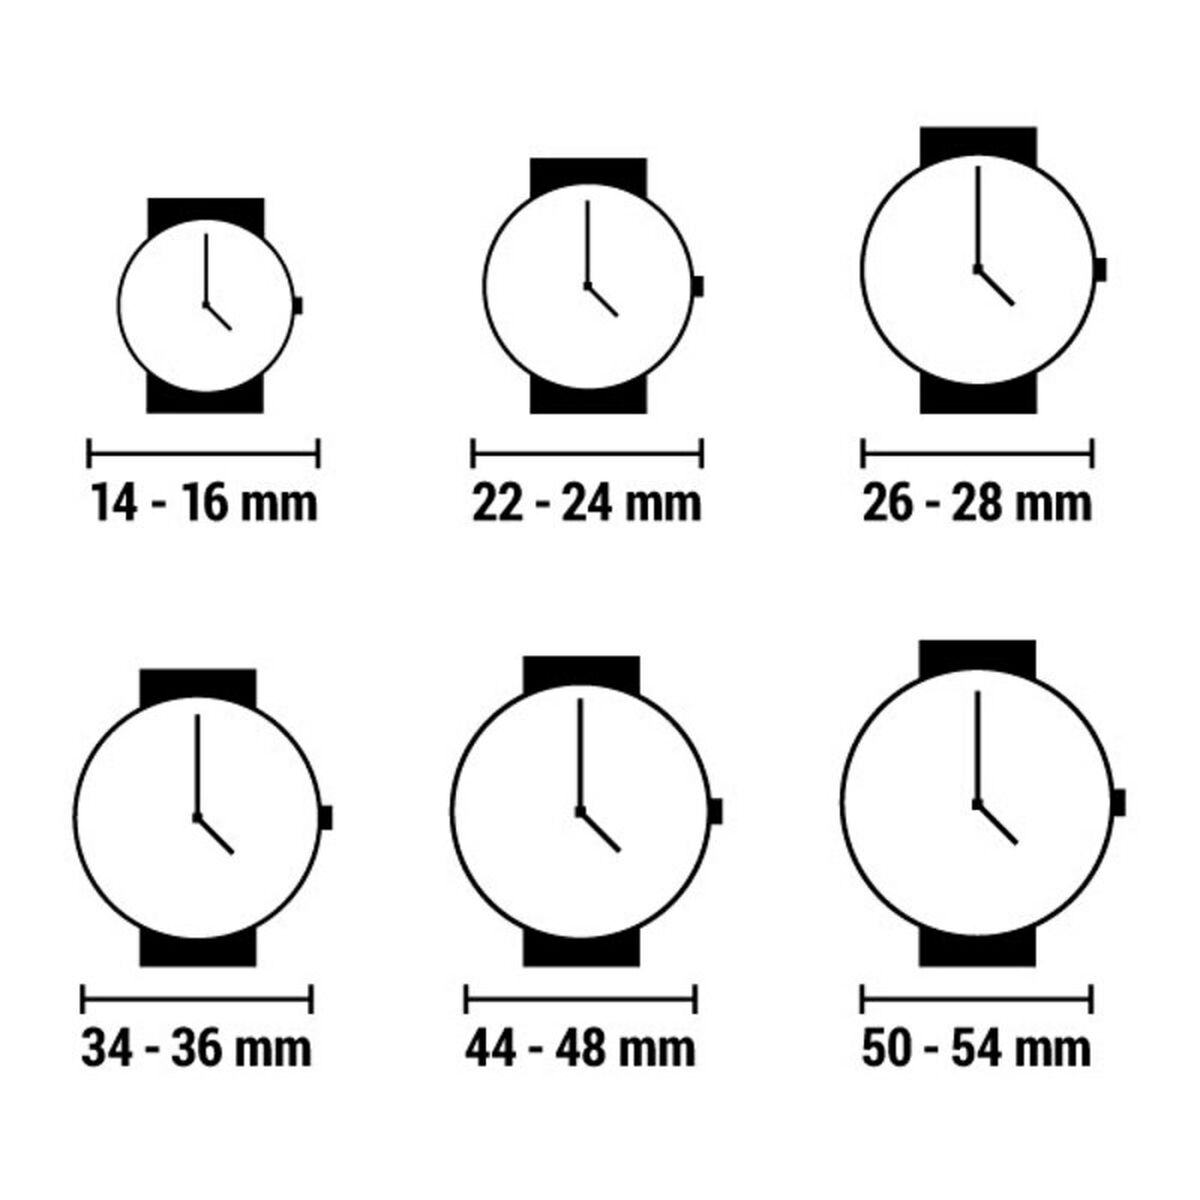 Horloge Dames Folli Follie wt13p001zpw (Ø 45 mm)